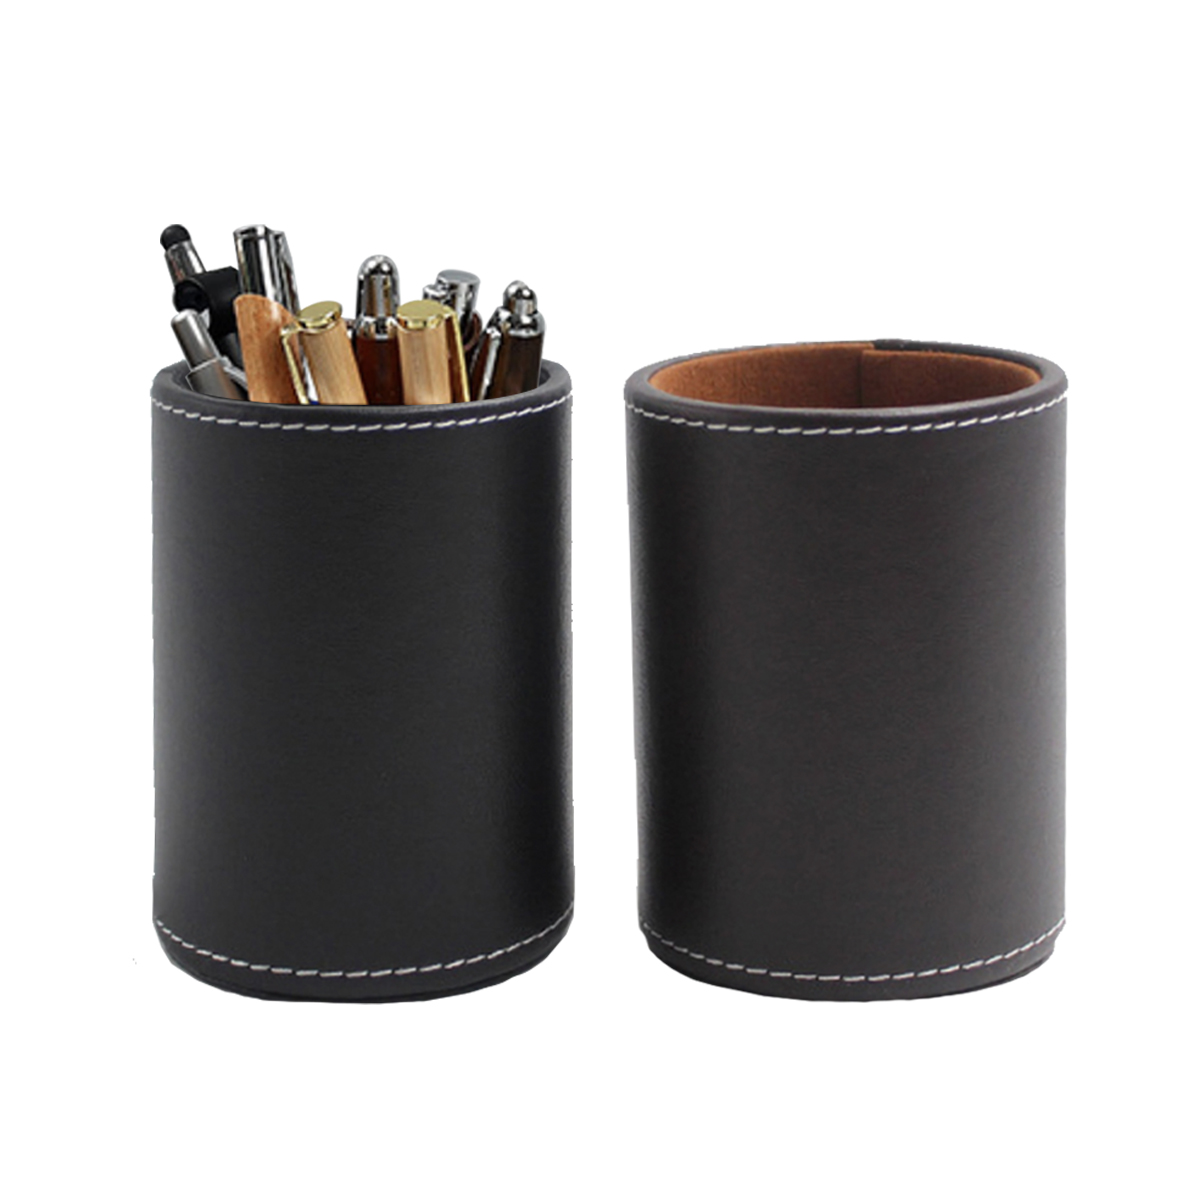 PU Leather Pen Holder  APAC Merchandise Solution